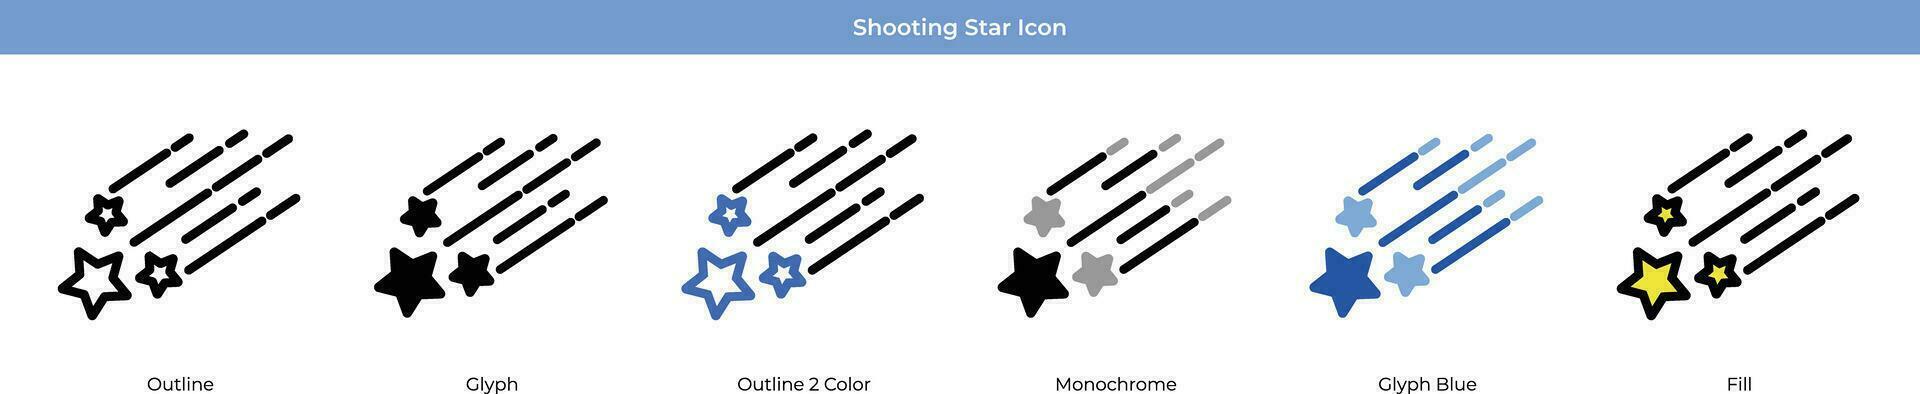 Shooting Star Icon vector